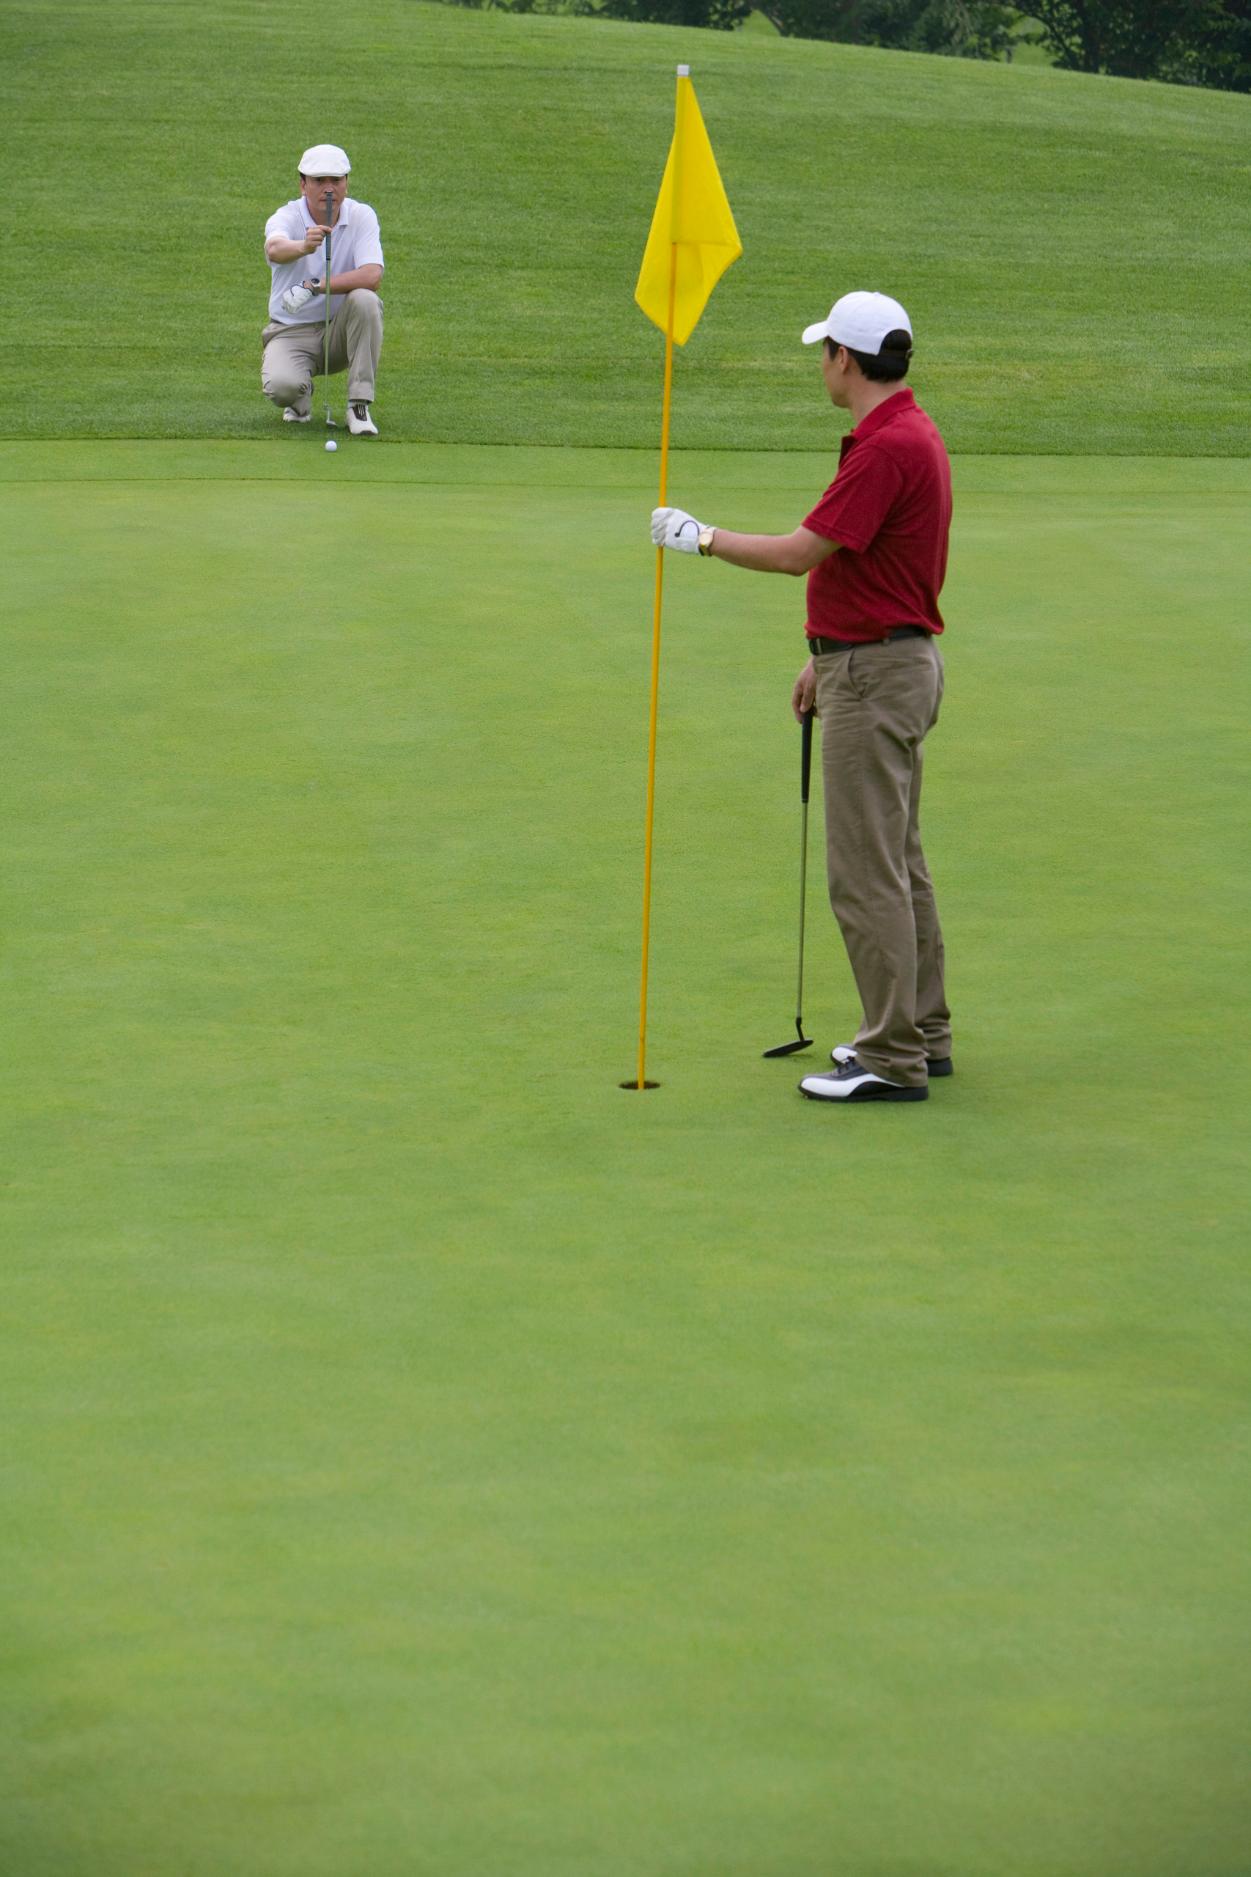 two-golfers-on-the-green-2023-11-27-05-23-55-utc